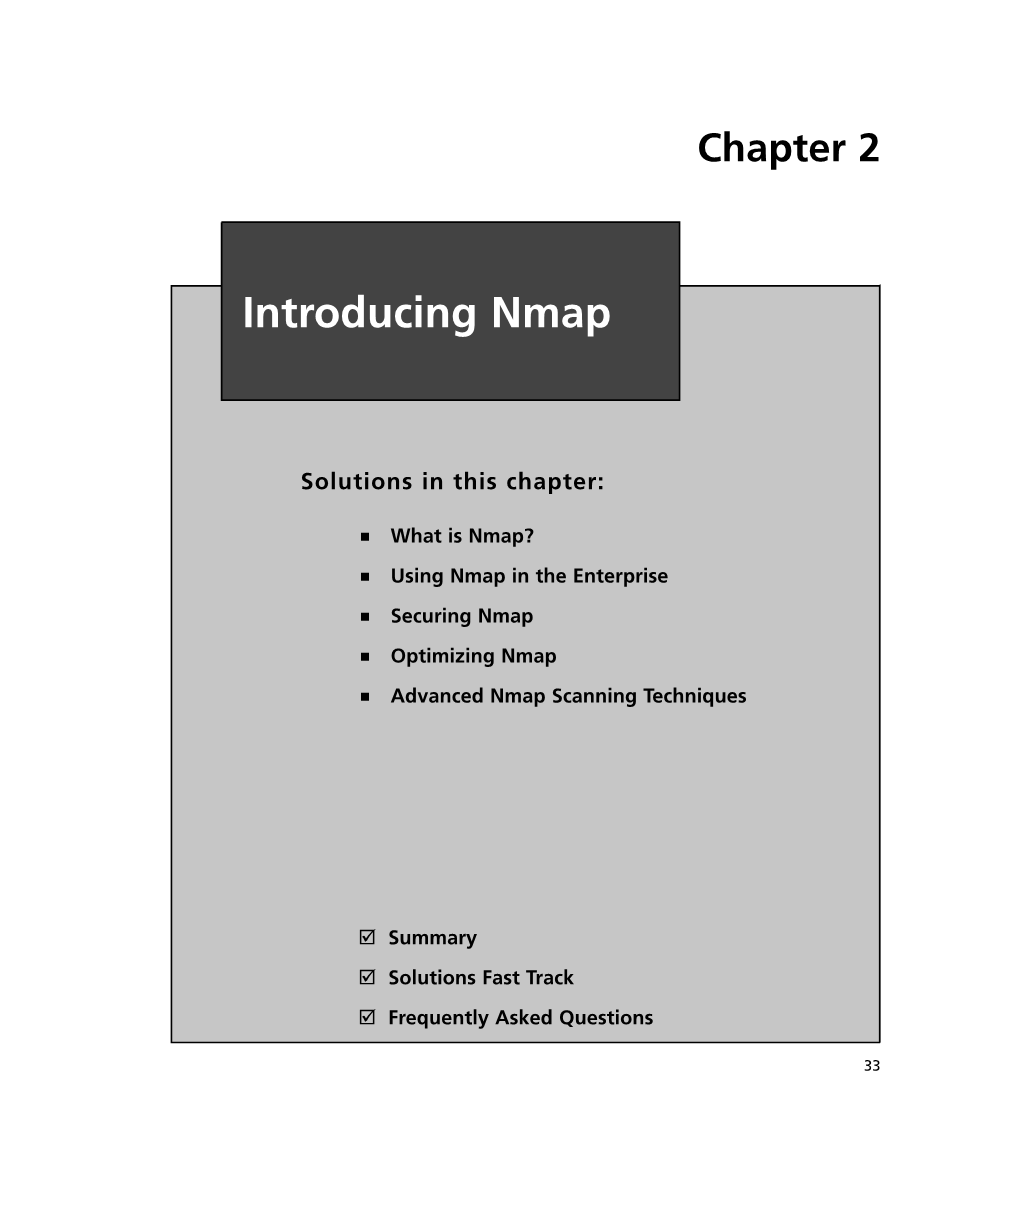 Introducing Nmap